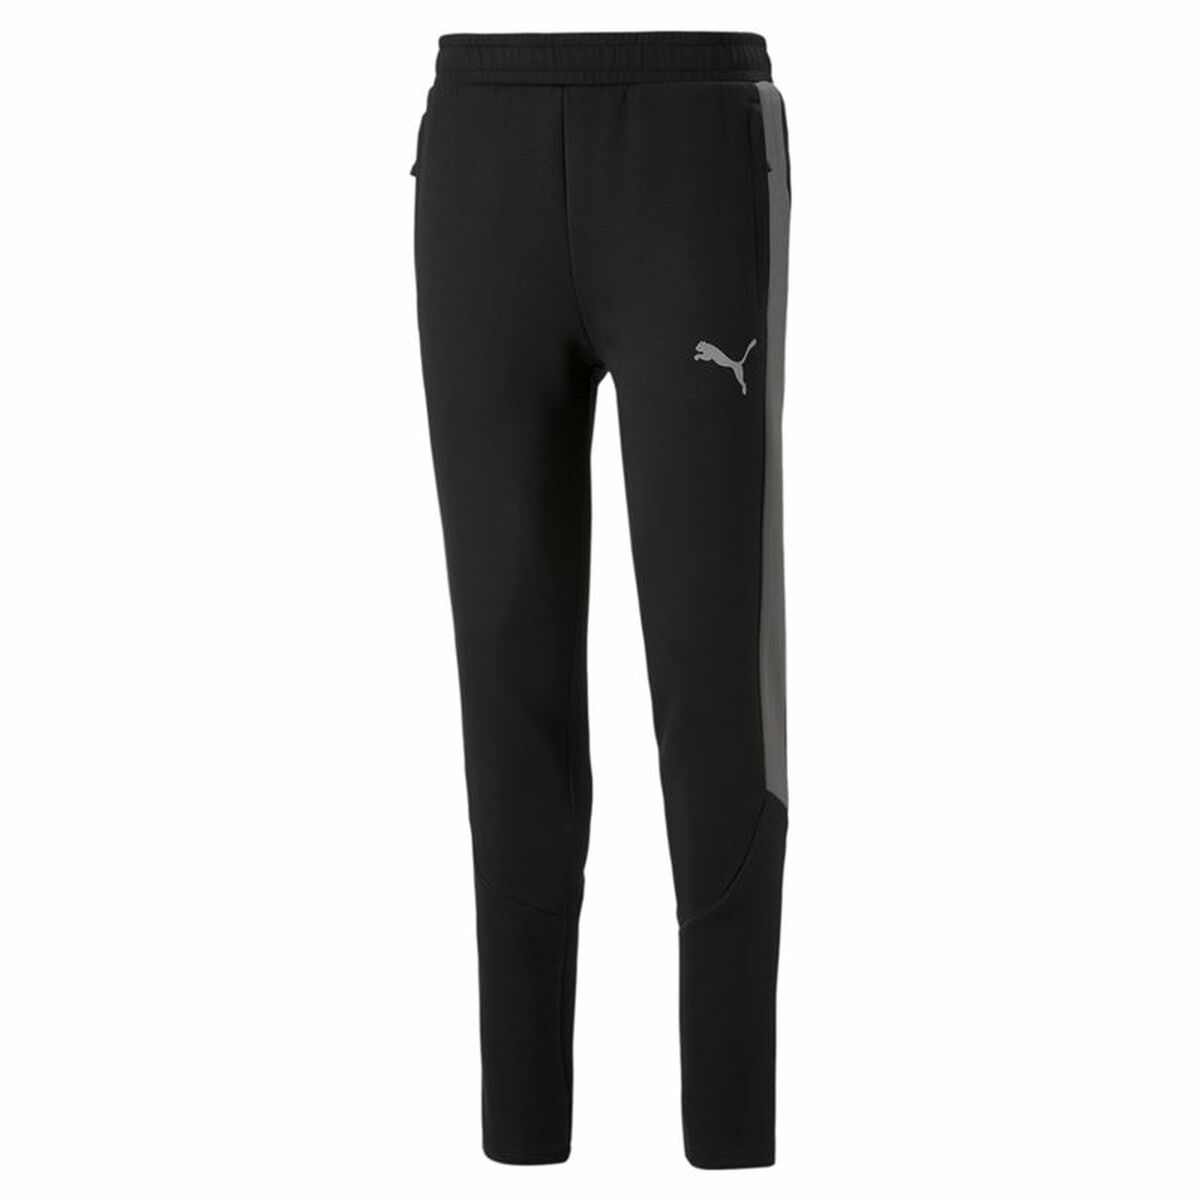 Pantaloni lungi de sport Puma Evostripe Negru - Mărime 2XL